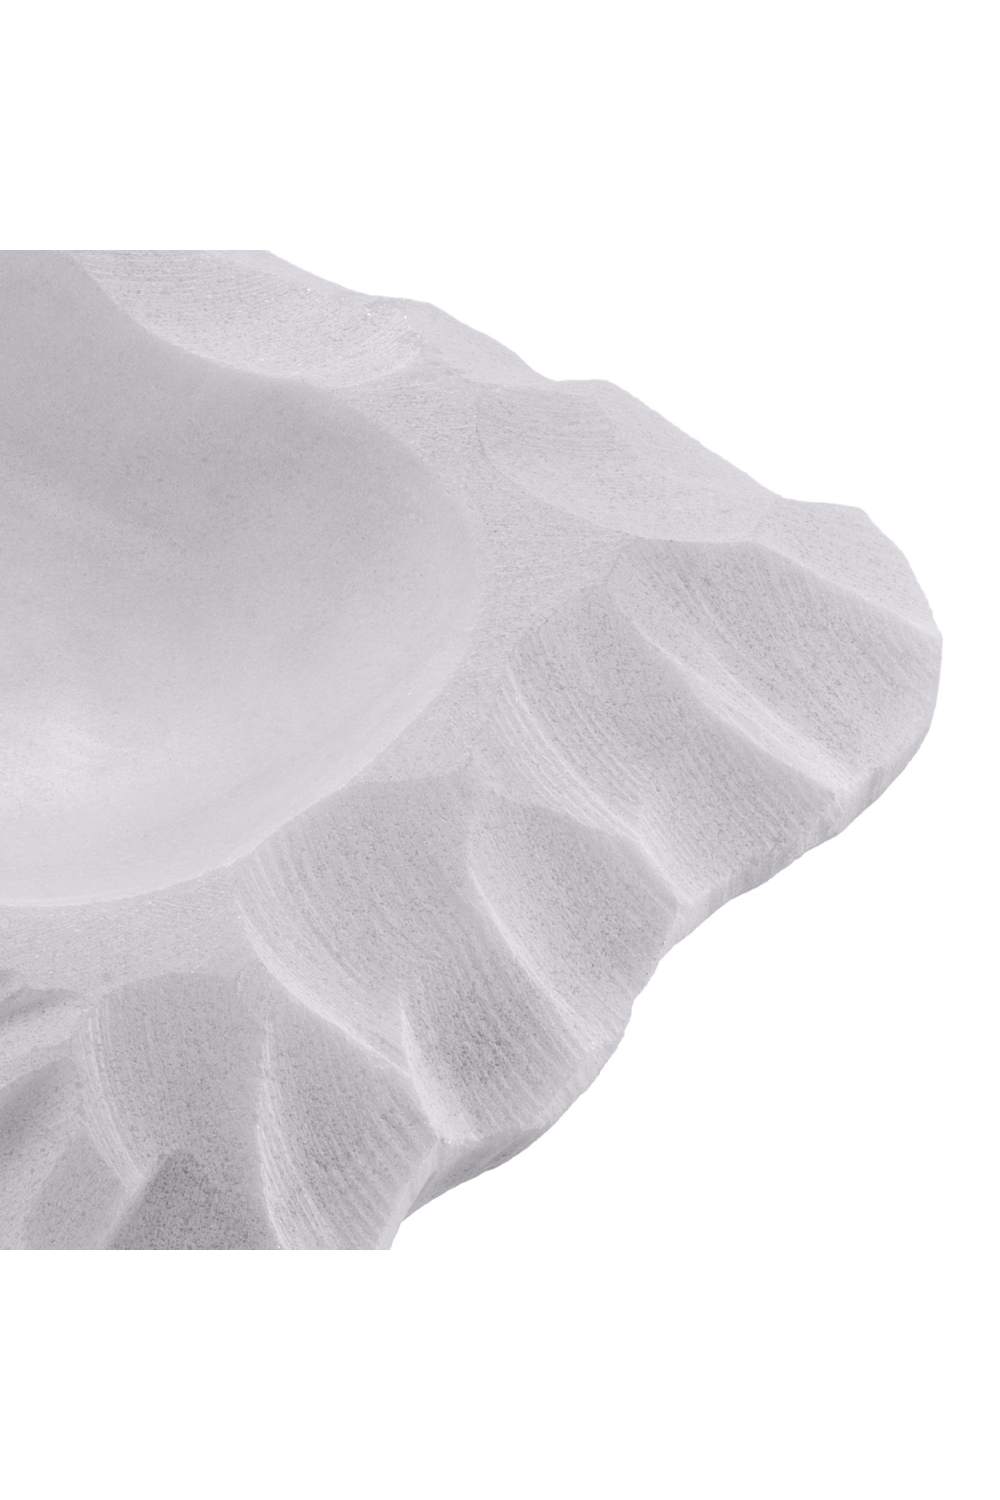 Honed White Marble Tray | Eichholtz Mauro | Oroa.com